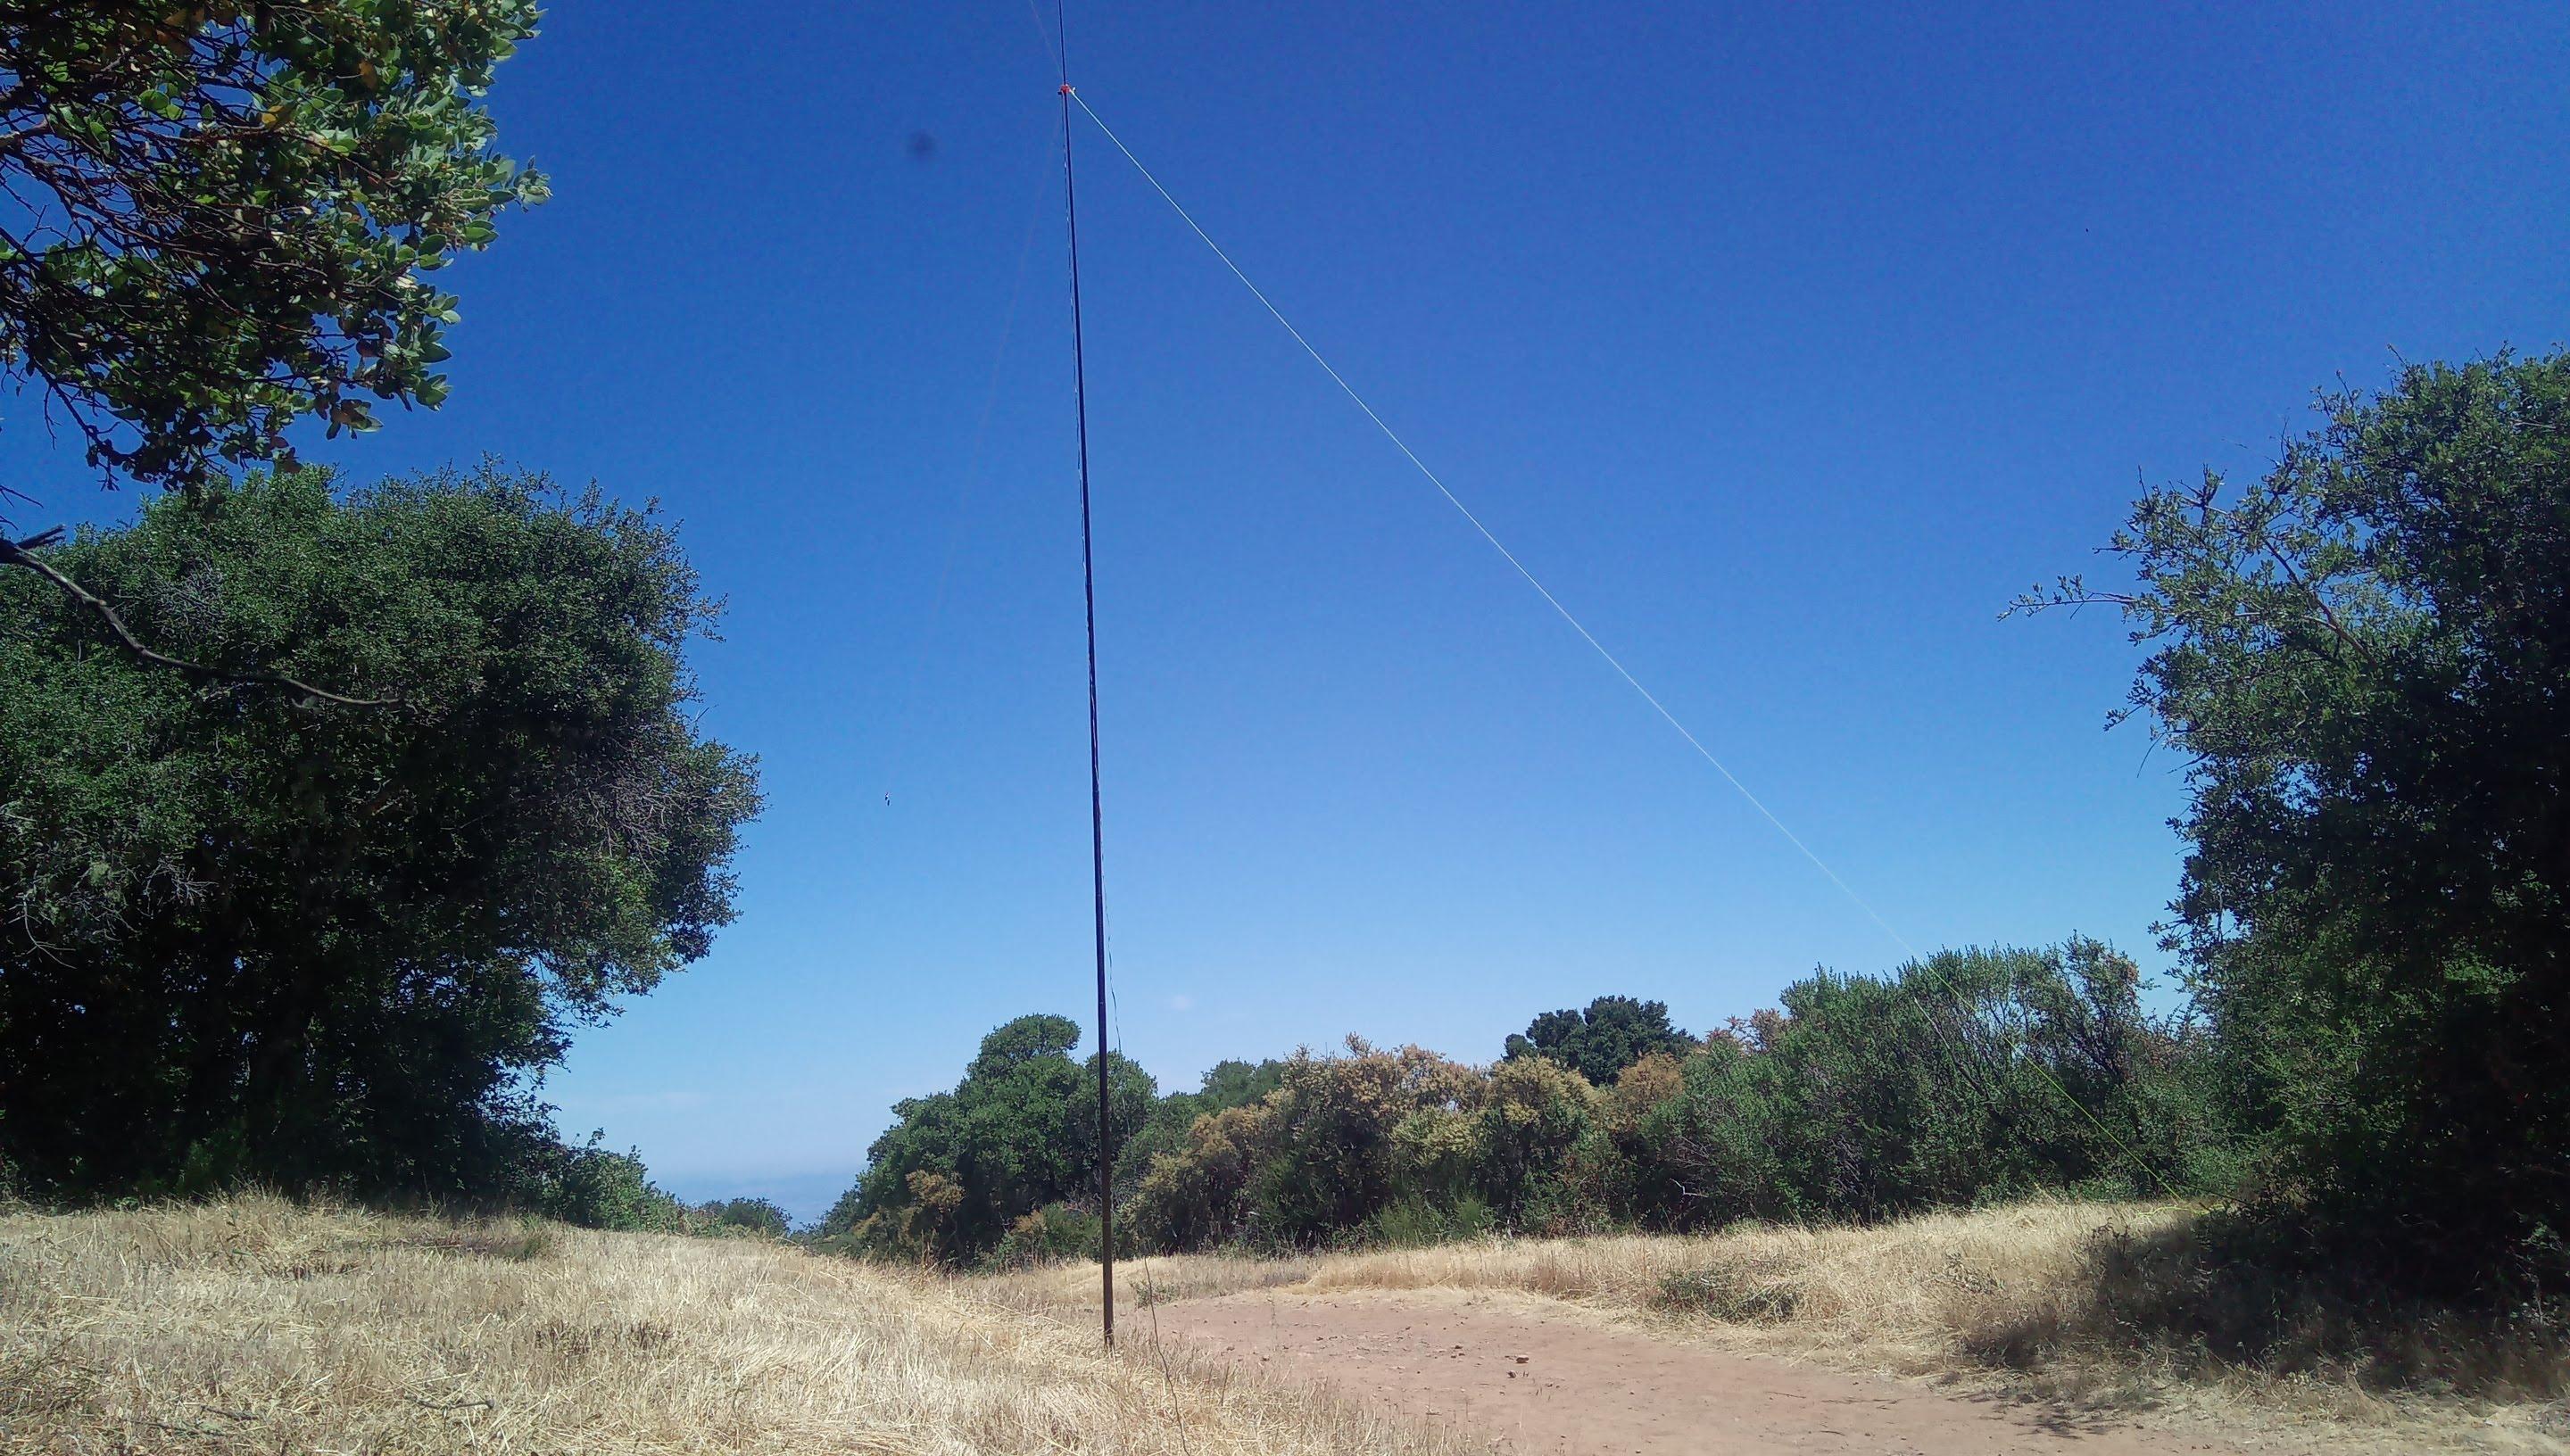 The antenna